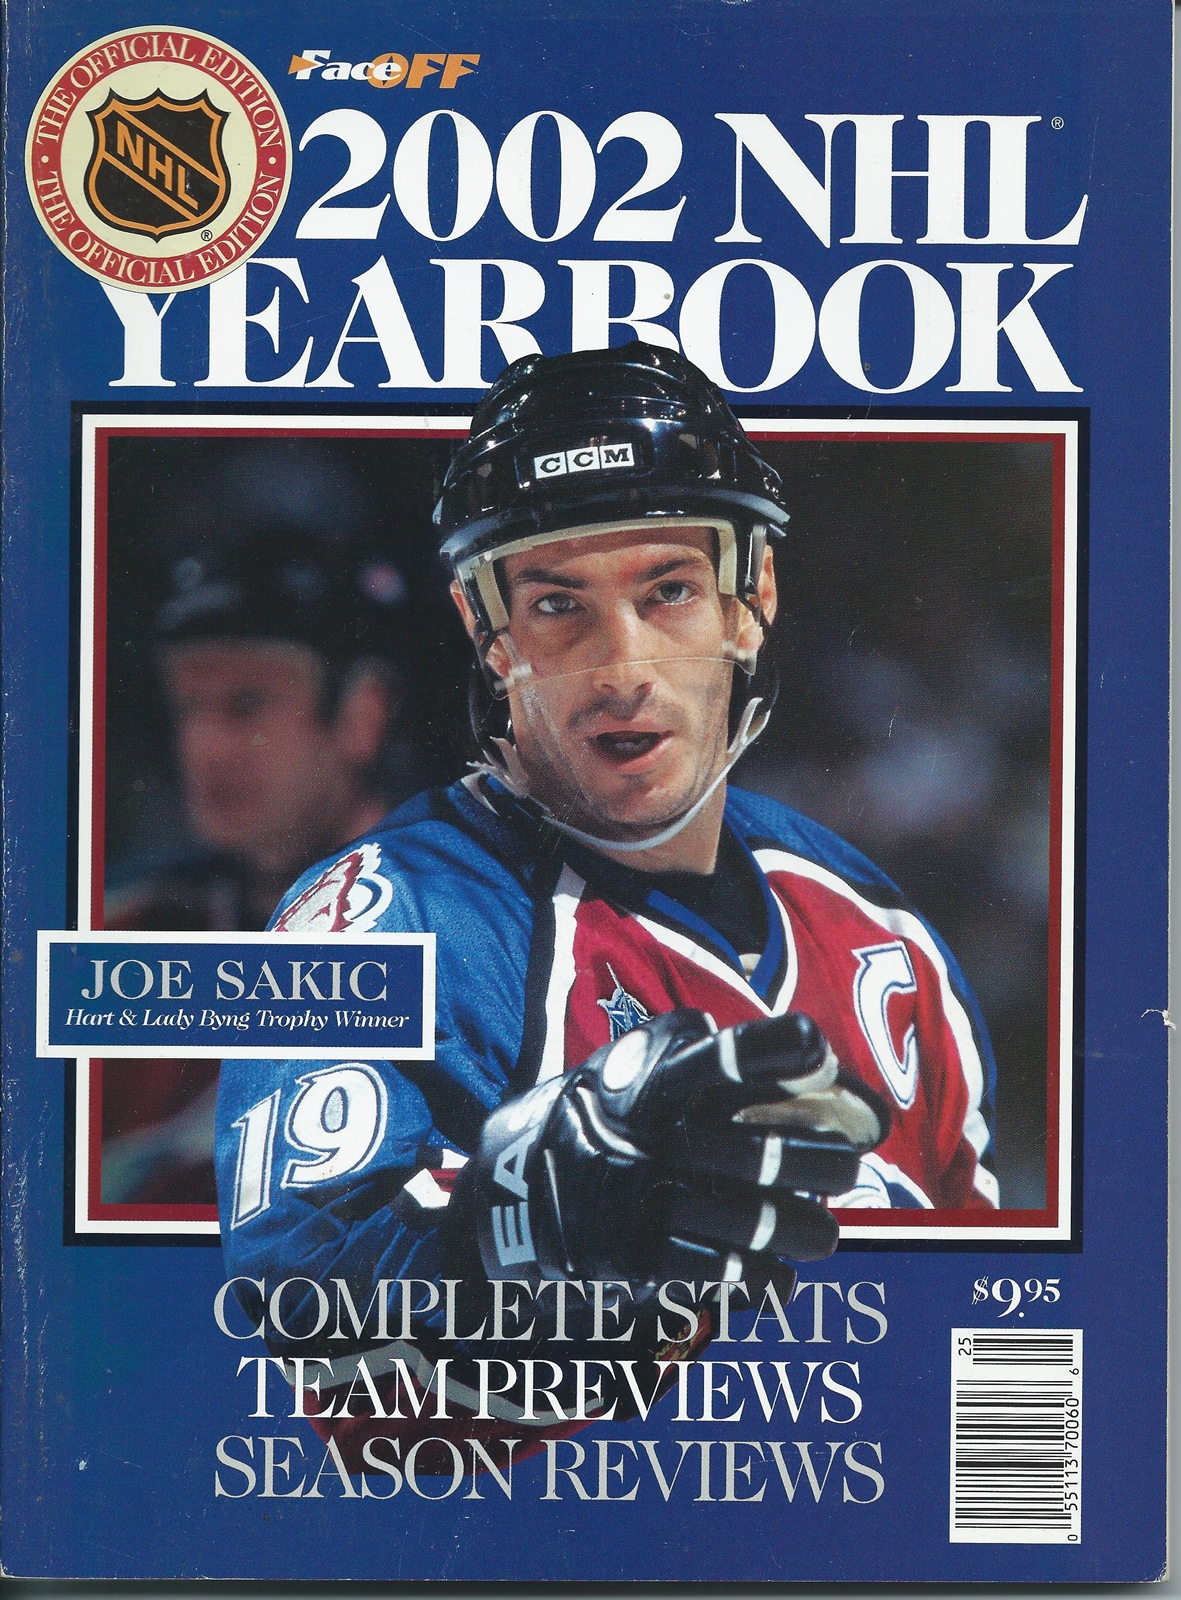 Joe Sakic - The Hockey Writers